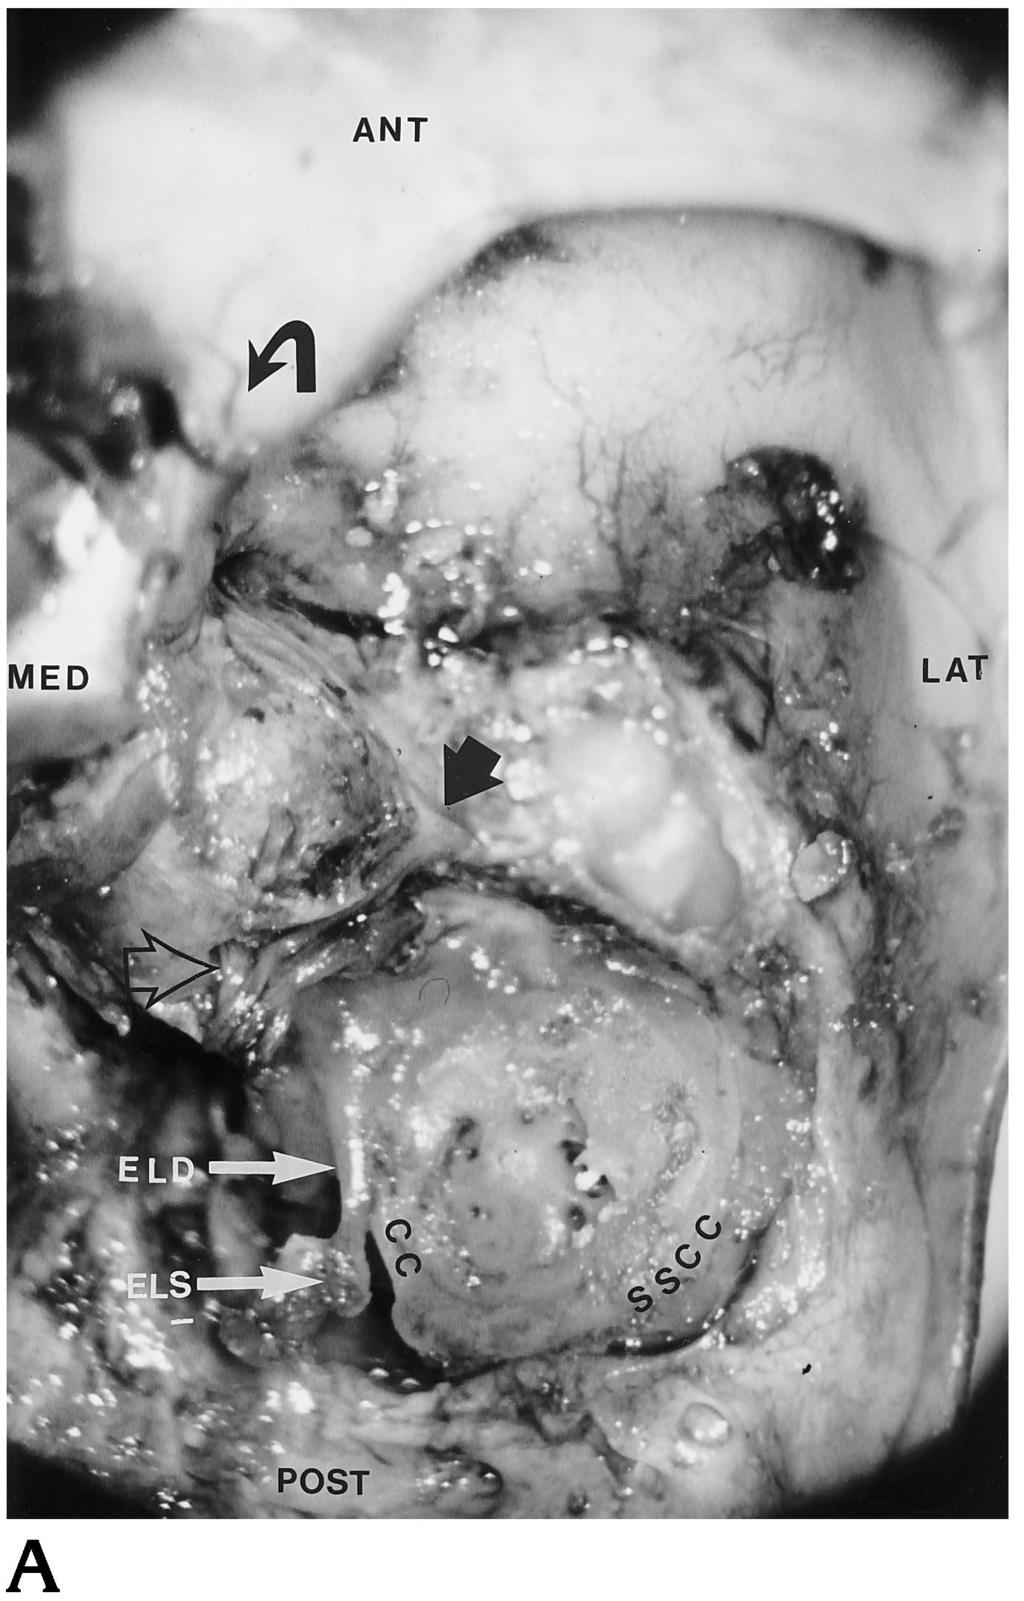 1476 NEMZEK AJNR: 17, September 1996 Fig 12. Endolymphatic duct and sac. A, Fetus, gestational age 18 weeks.